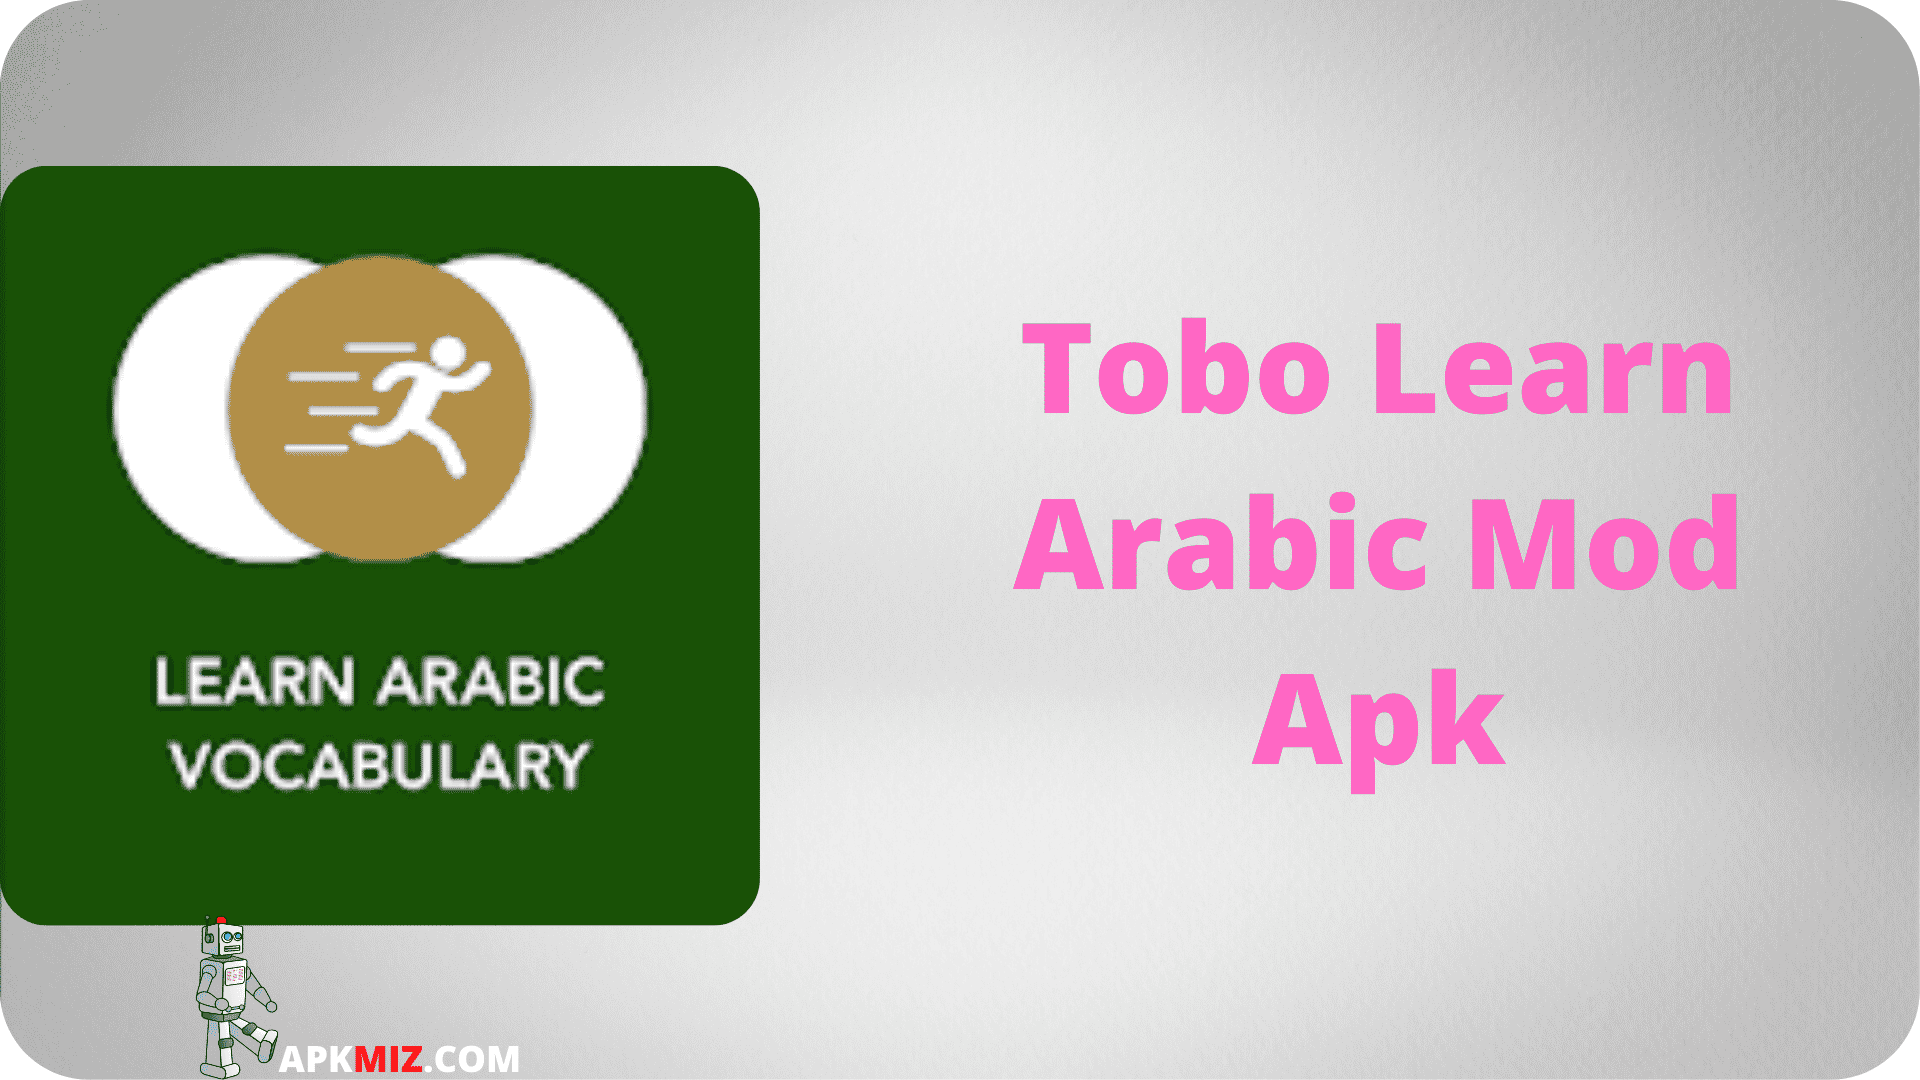 Tobo Learn Arabic Mod Apk